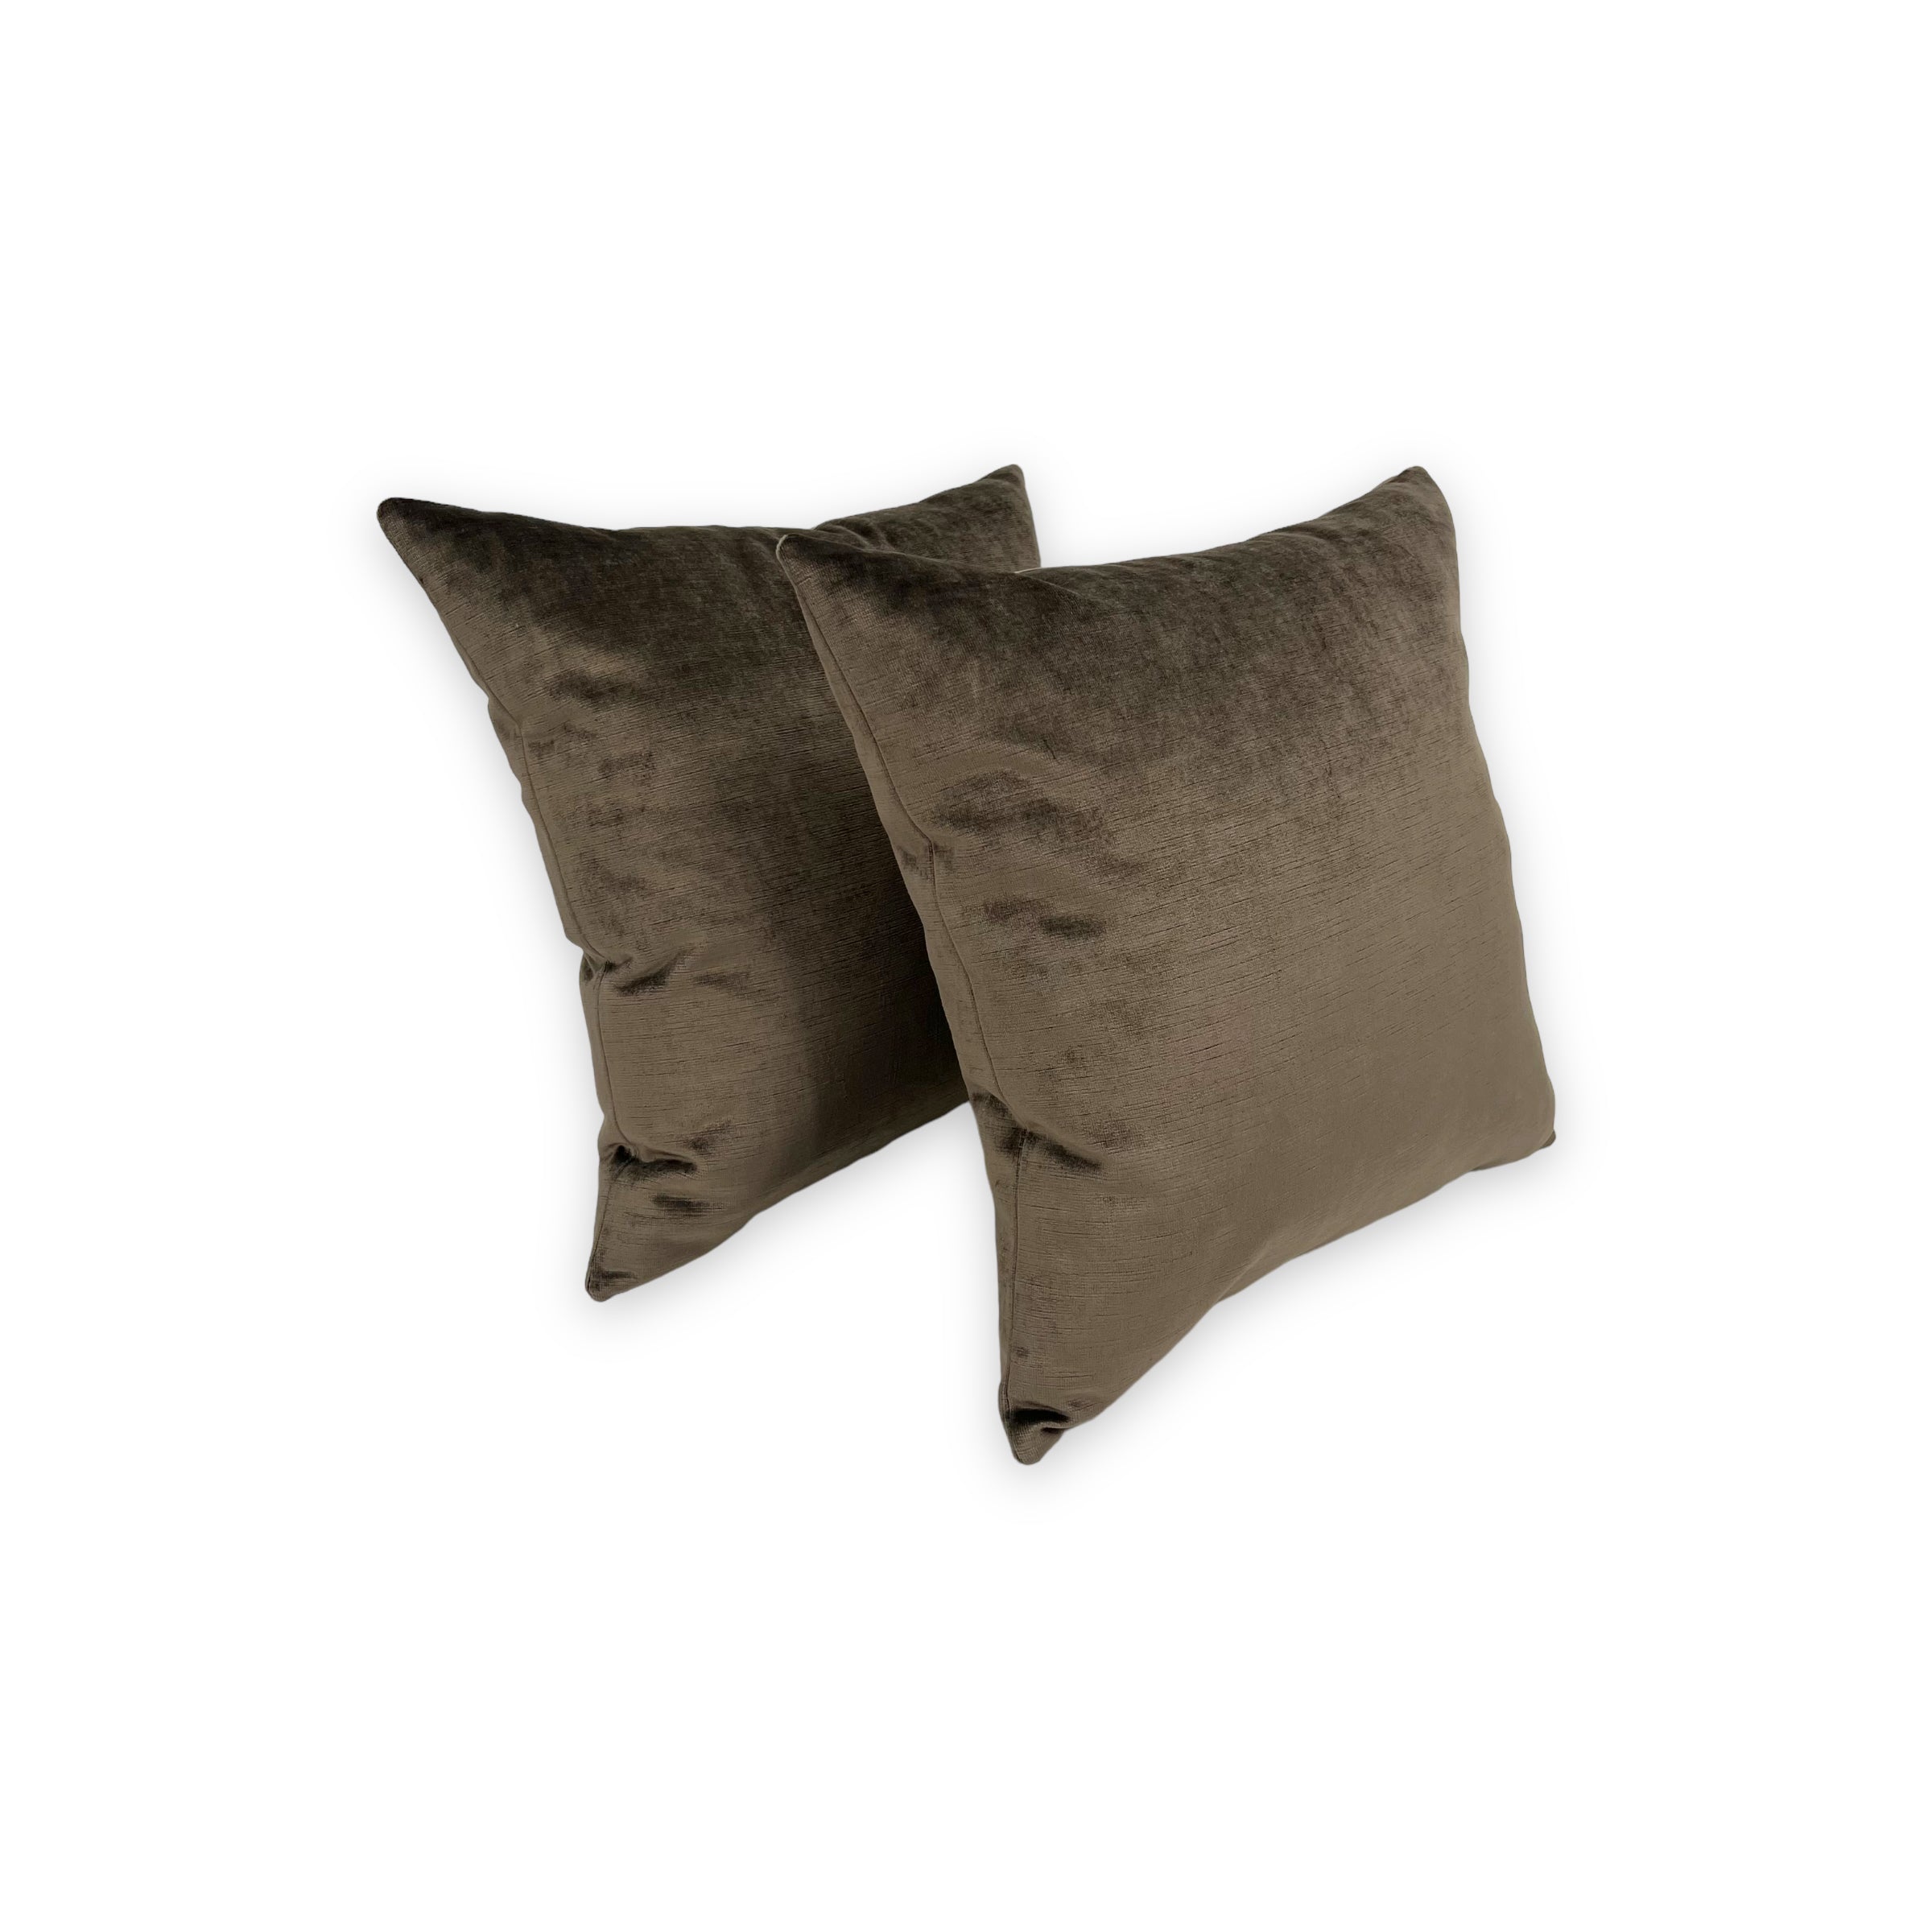 Sepia Square Pillow